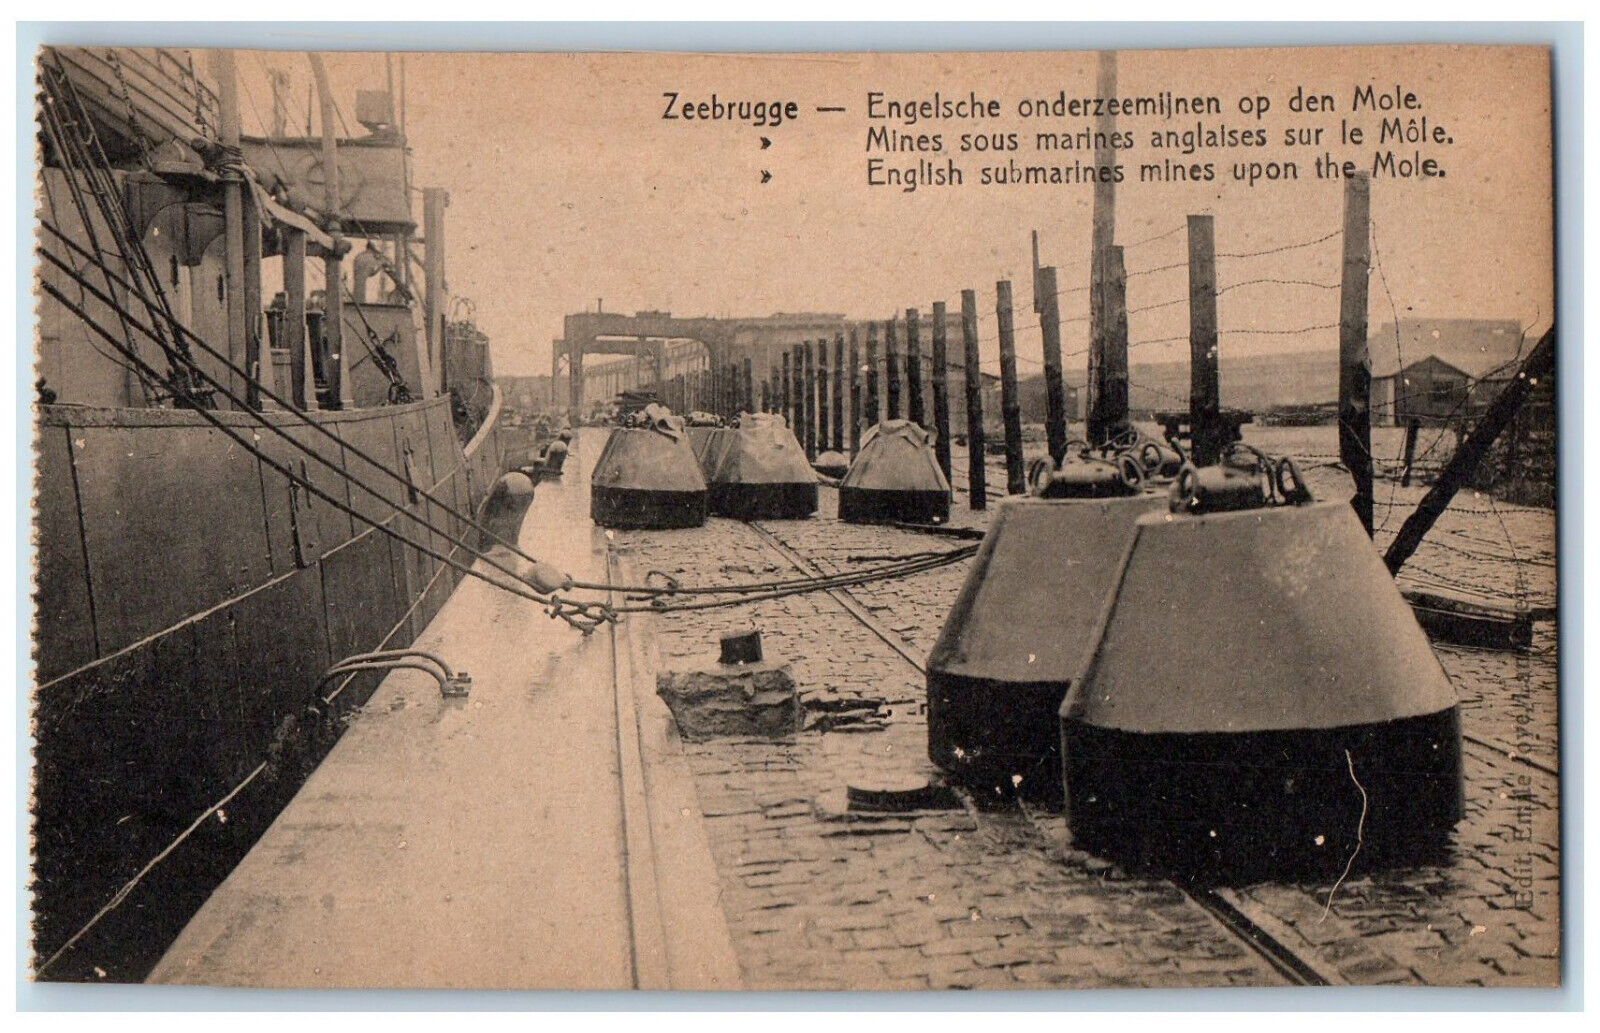 Zeebrugge Belgium Postcard English Submarines Mines Upon The Mole c1910 WW1